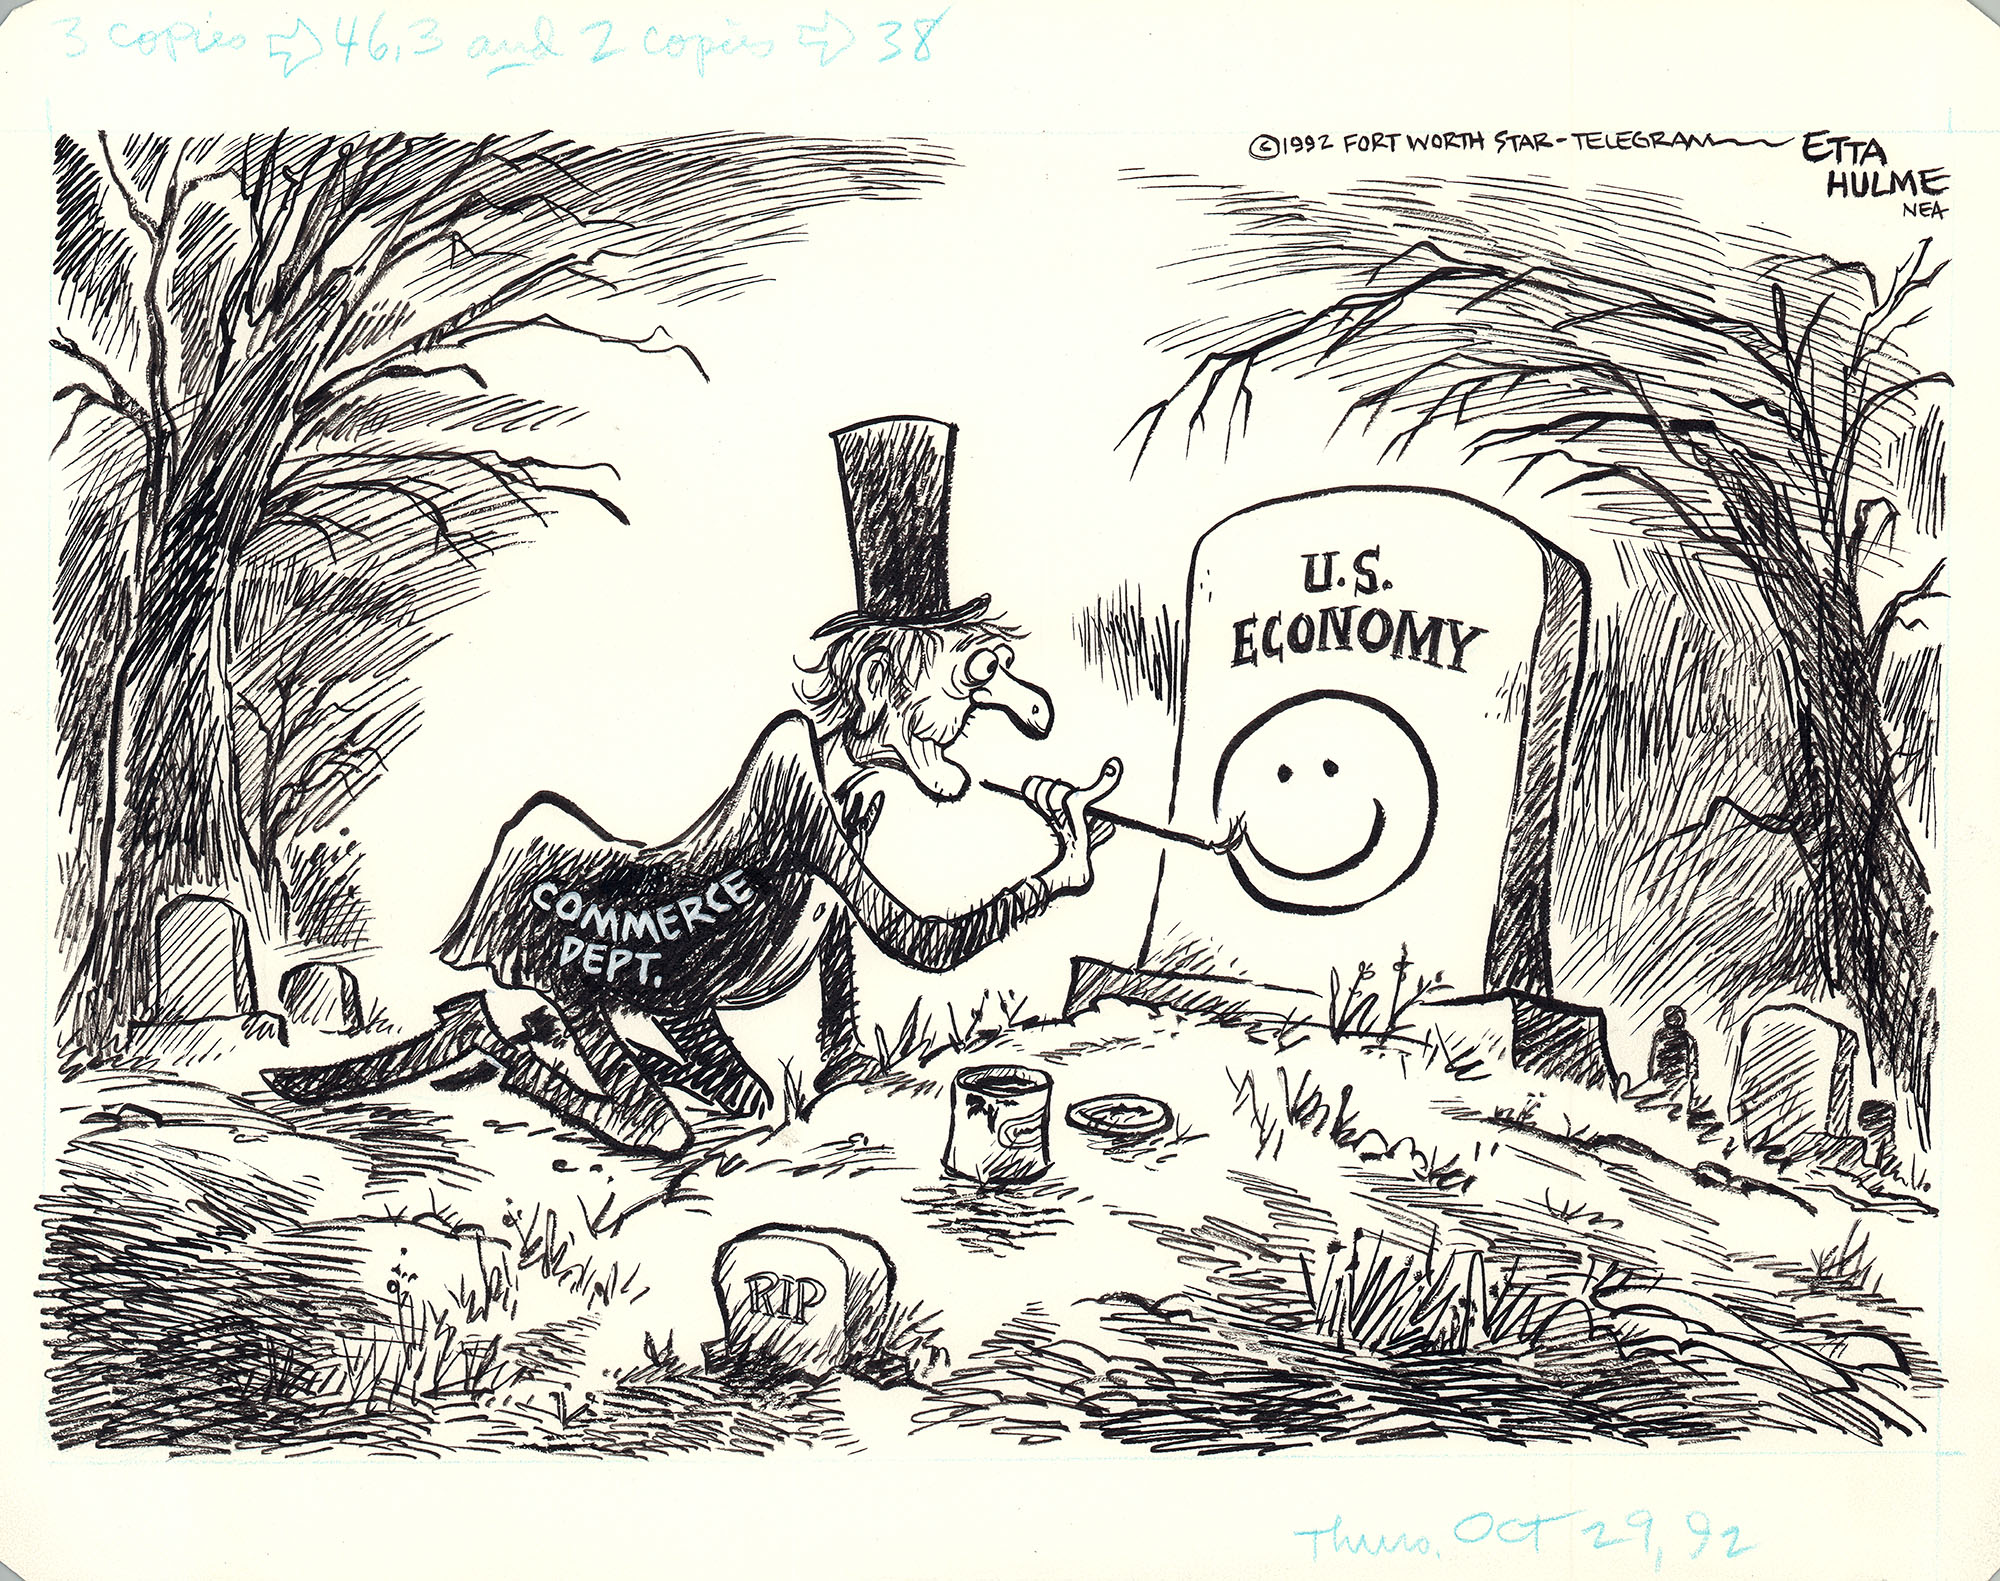 U.S. Economy" | Etta Hulme Cartoon Archive